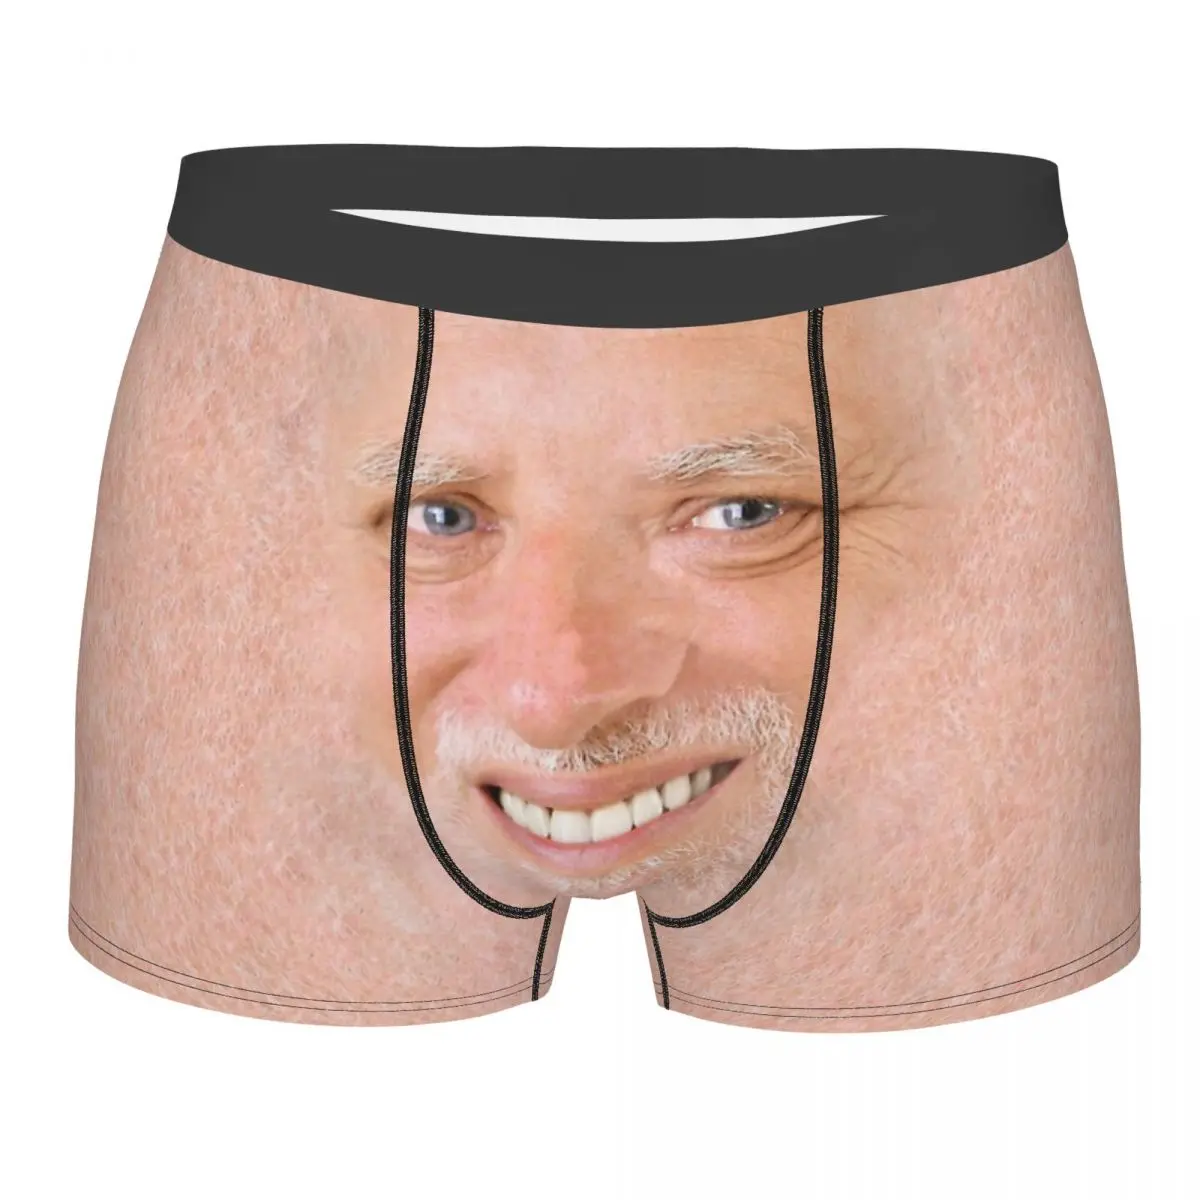 

Hide Meme The Pain Harold Face Skin Underpants Breathable Panties Shorts Boxer Briefs Man Underwear Comfortable